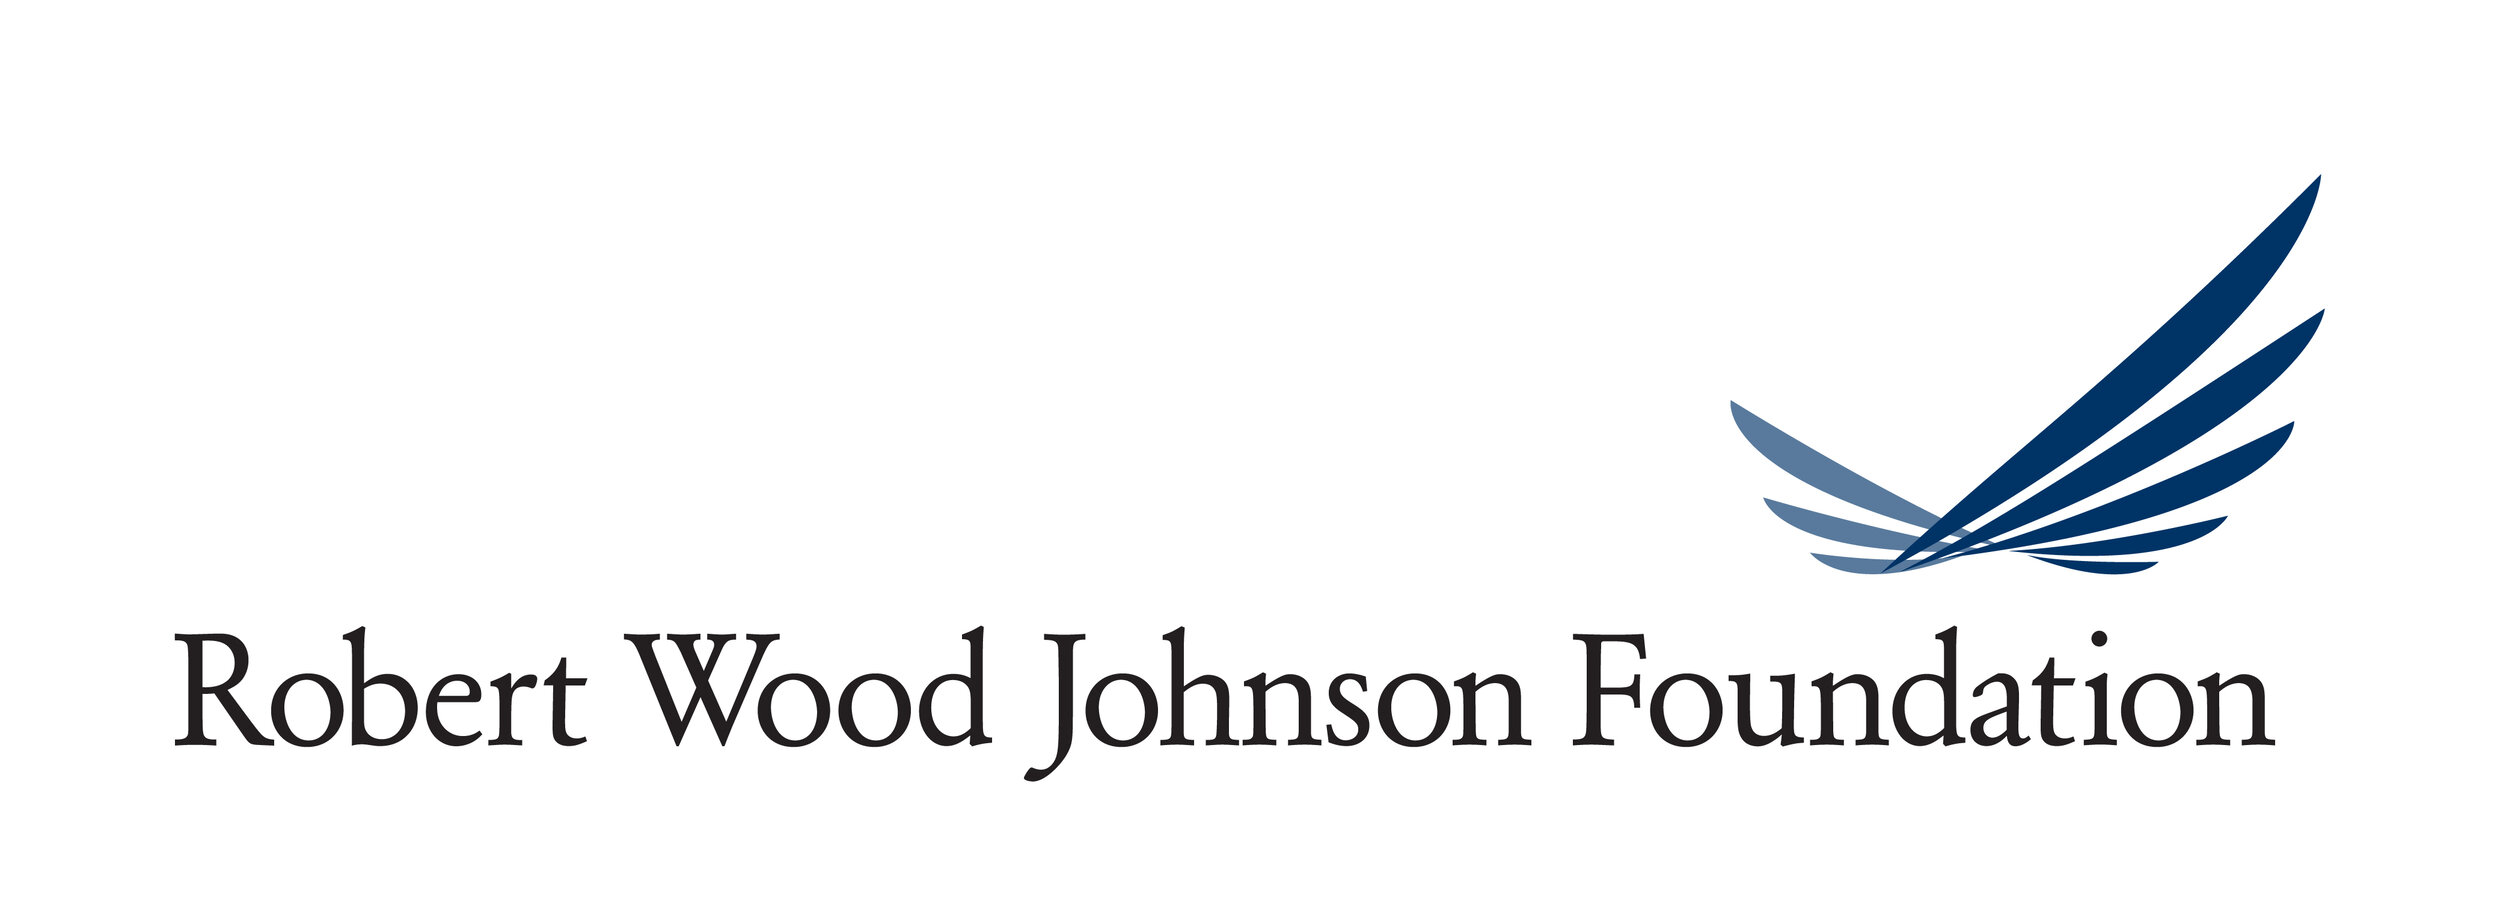 Robert Wood Johnson Foundation .jpg